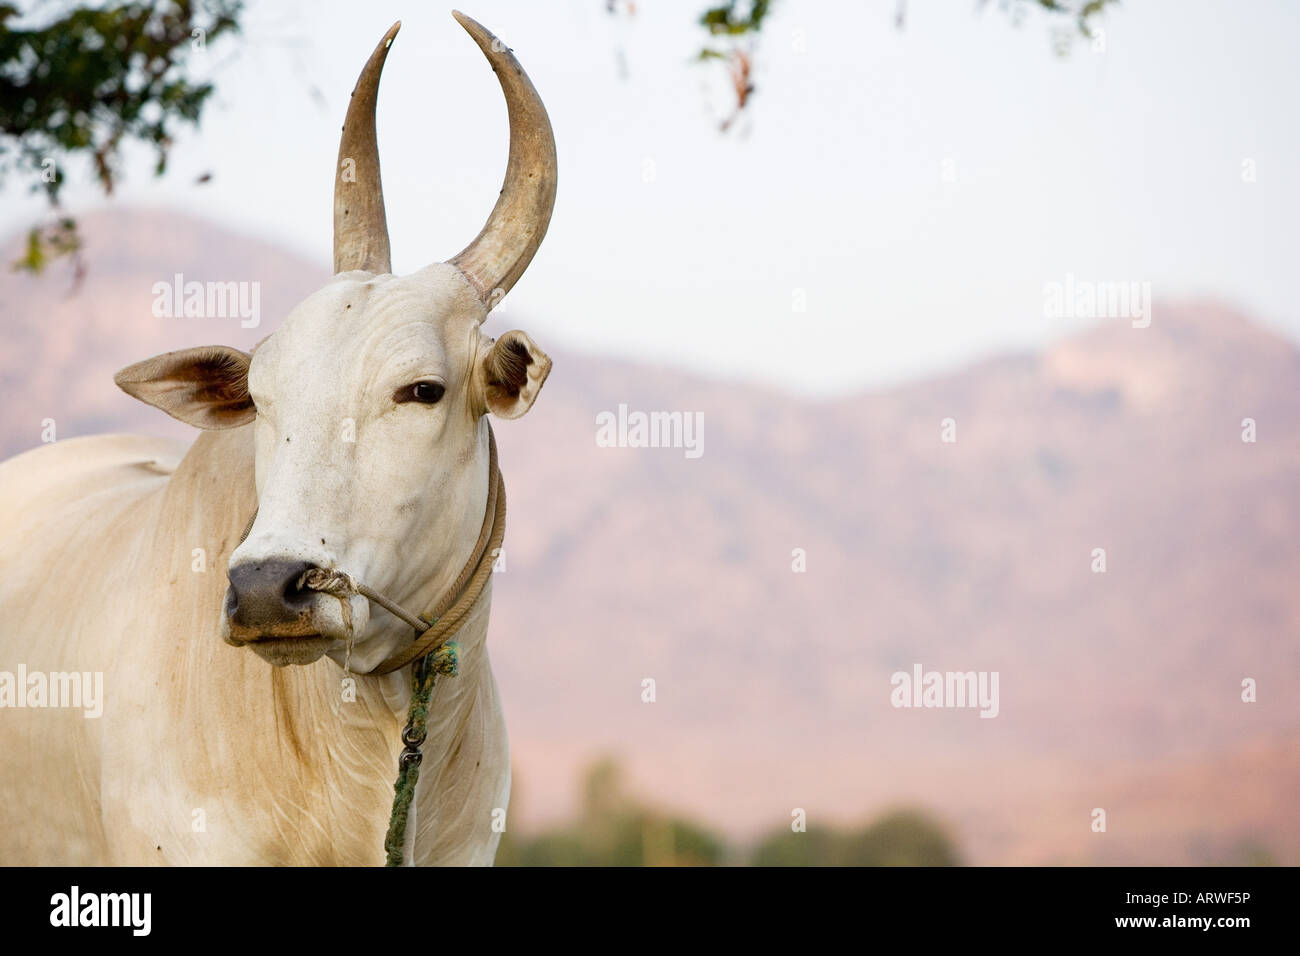 Bos primigenius indicus. Indian Zebu bull in afternoon light. Andhra Pradesh, India Stock Photo